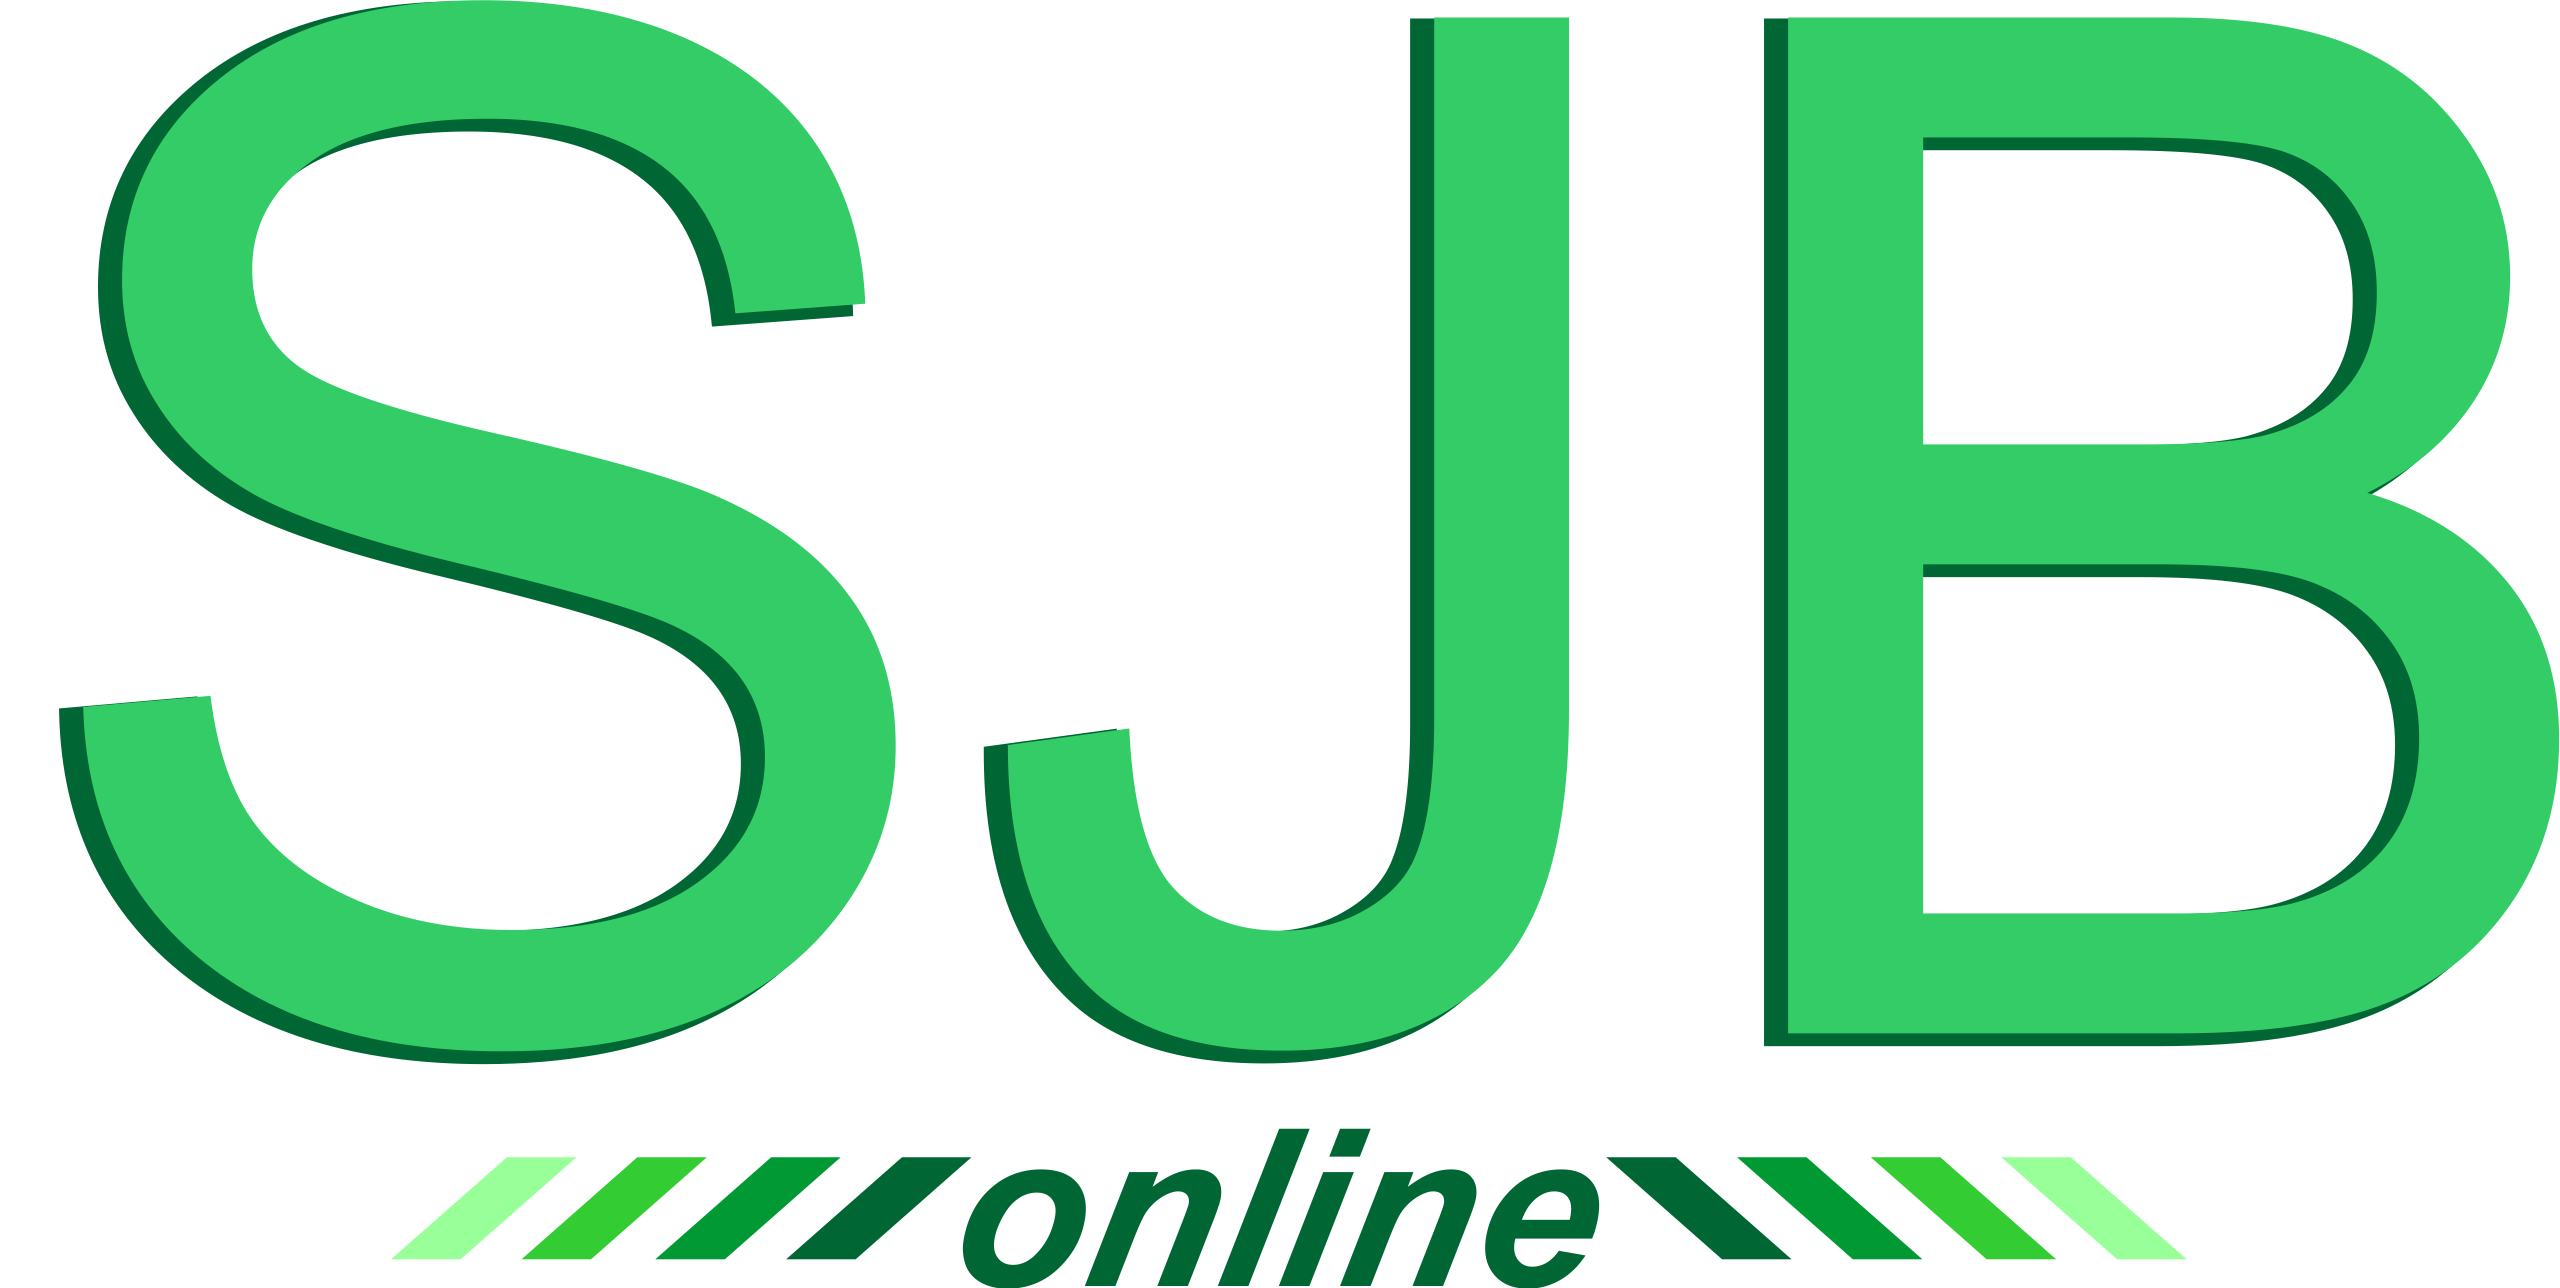 (c) Sjbonline.com.br